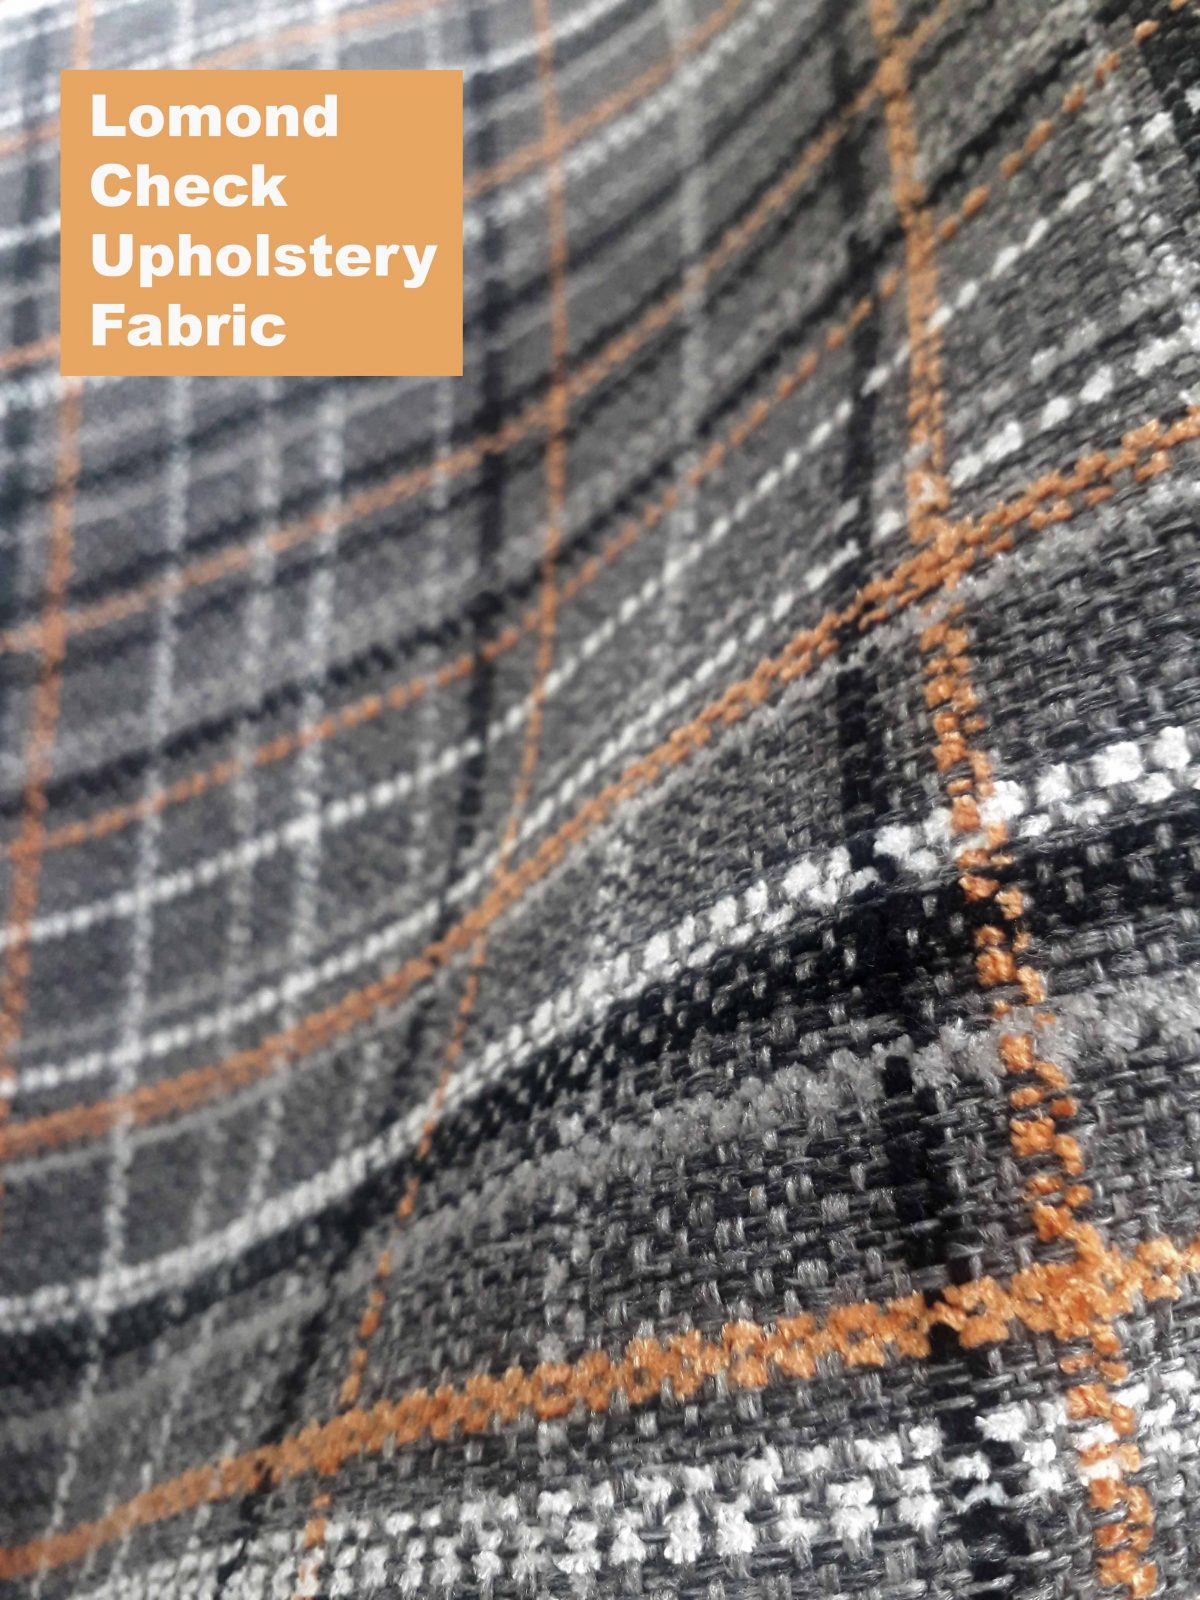 Lomond Check Upholstery Fabric